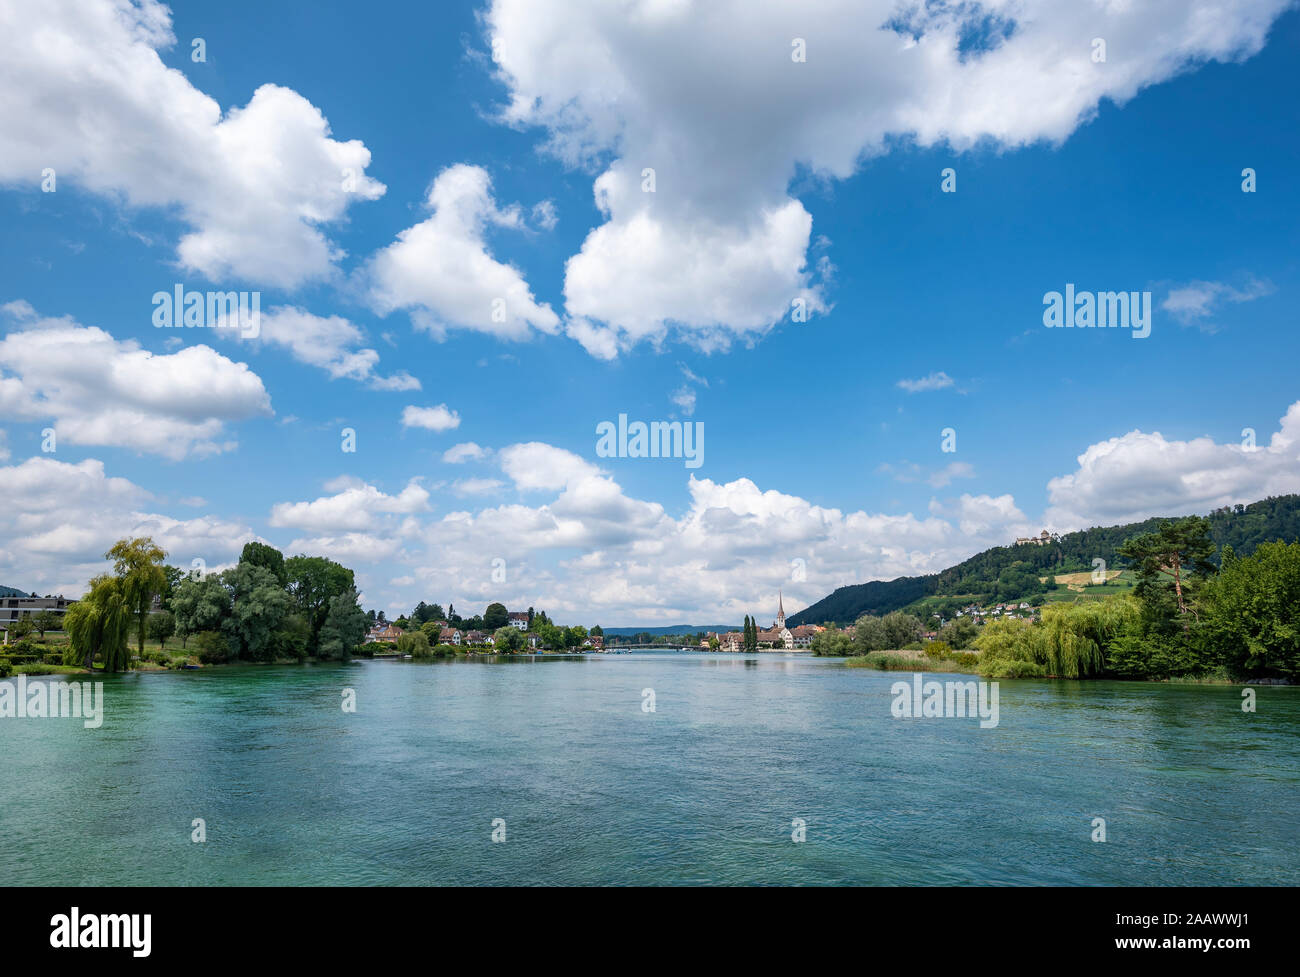 Scenic view of river against blue sky at Stein am Rhein, Switzerland Stock Photo